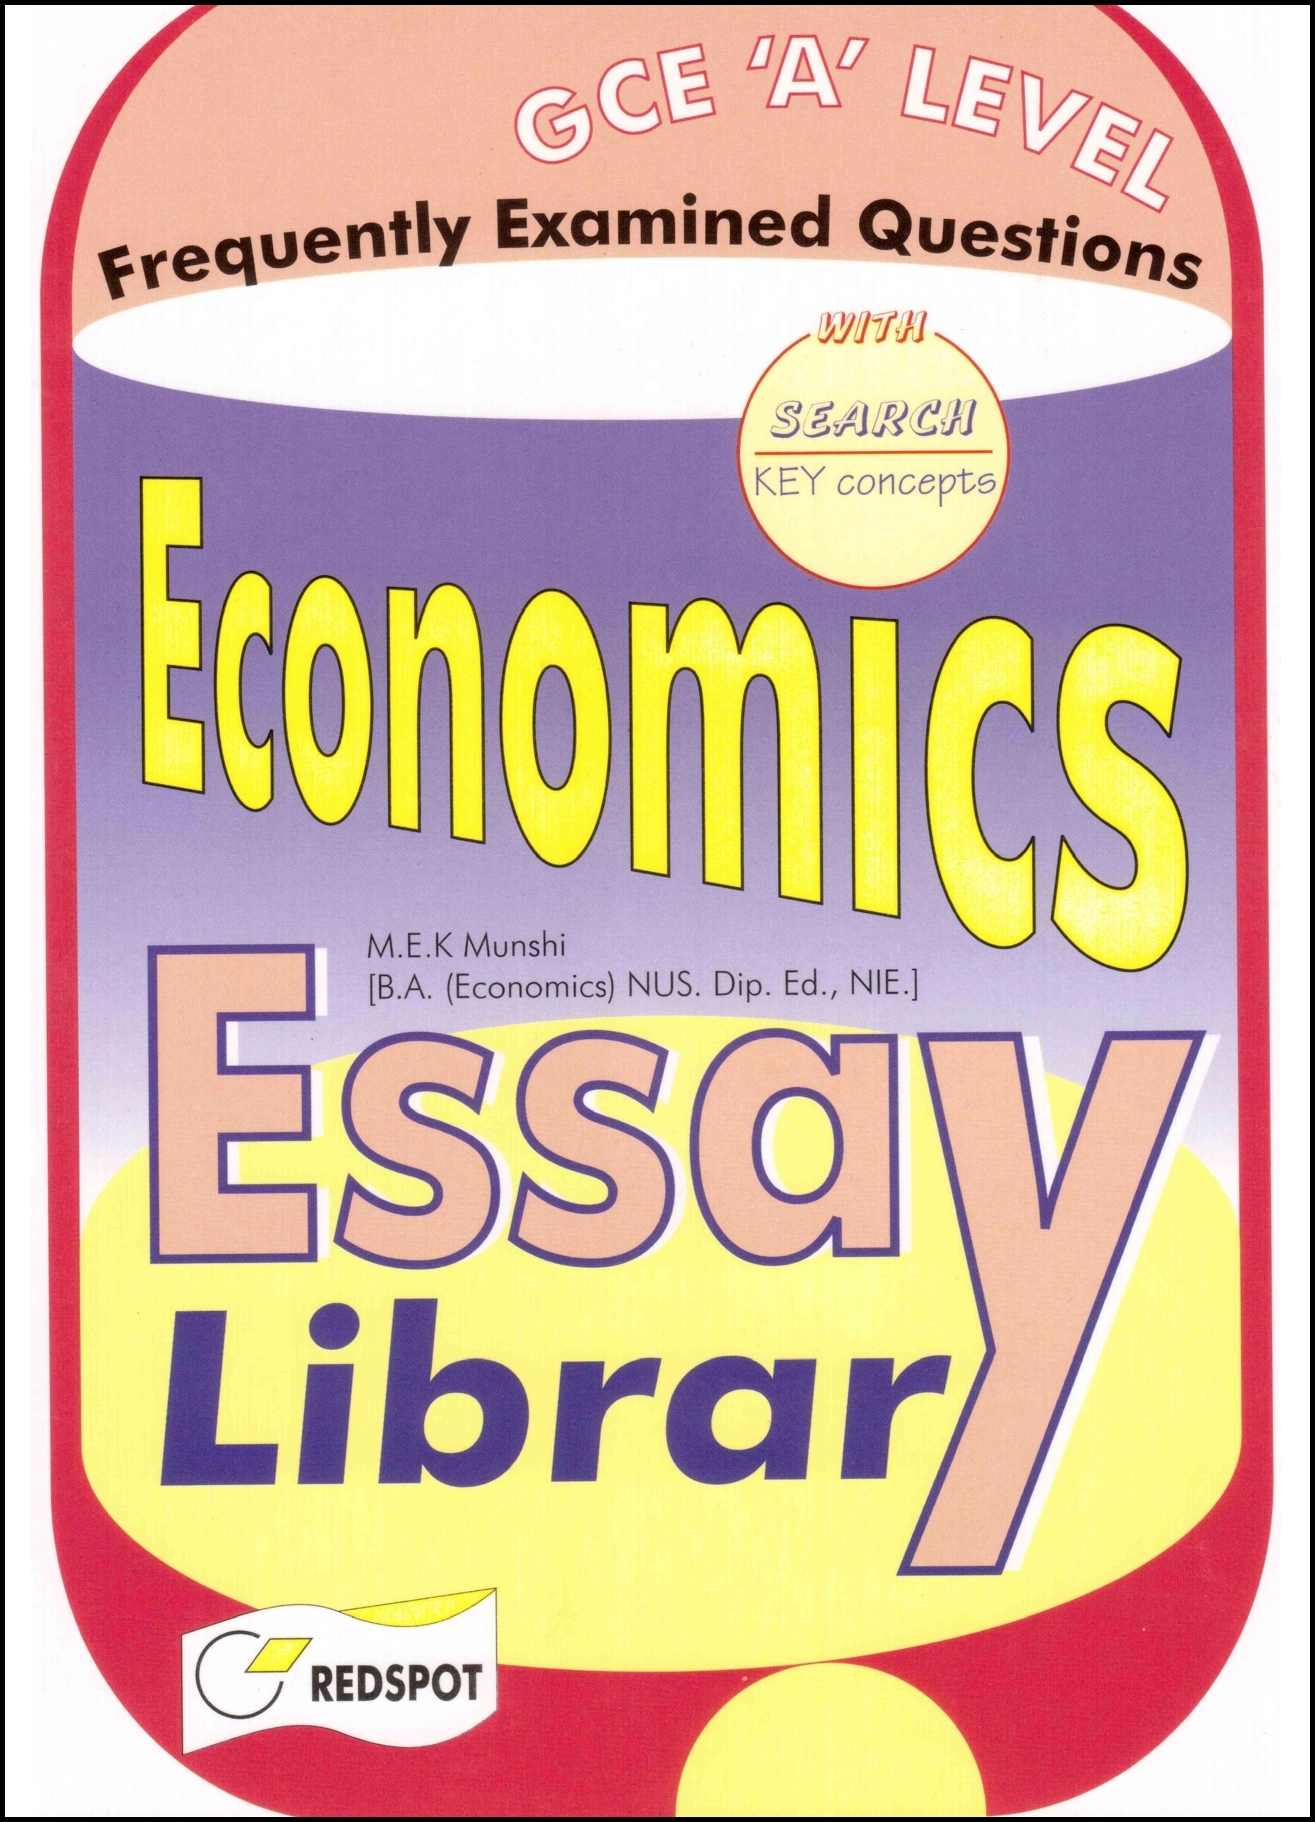 REDSPOT  A Level Economics Essay Library